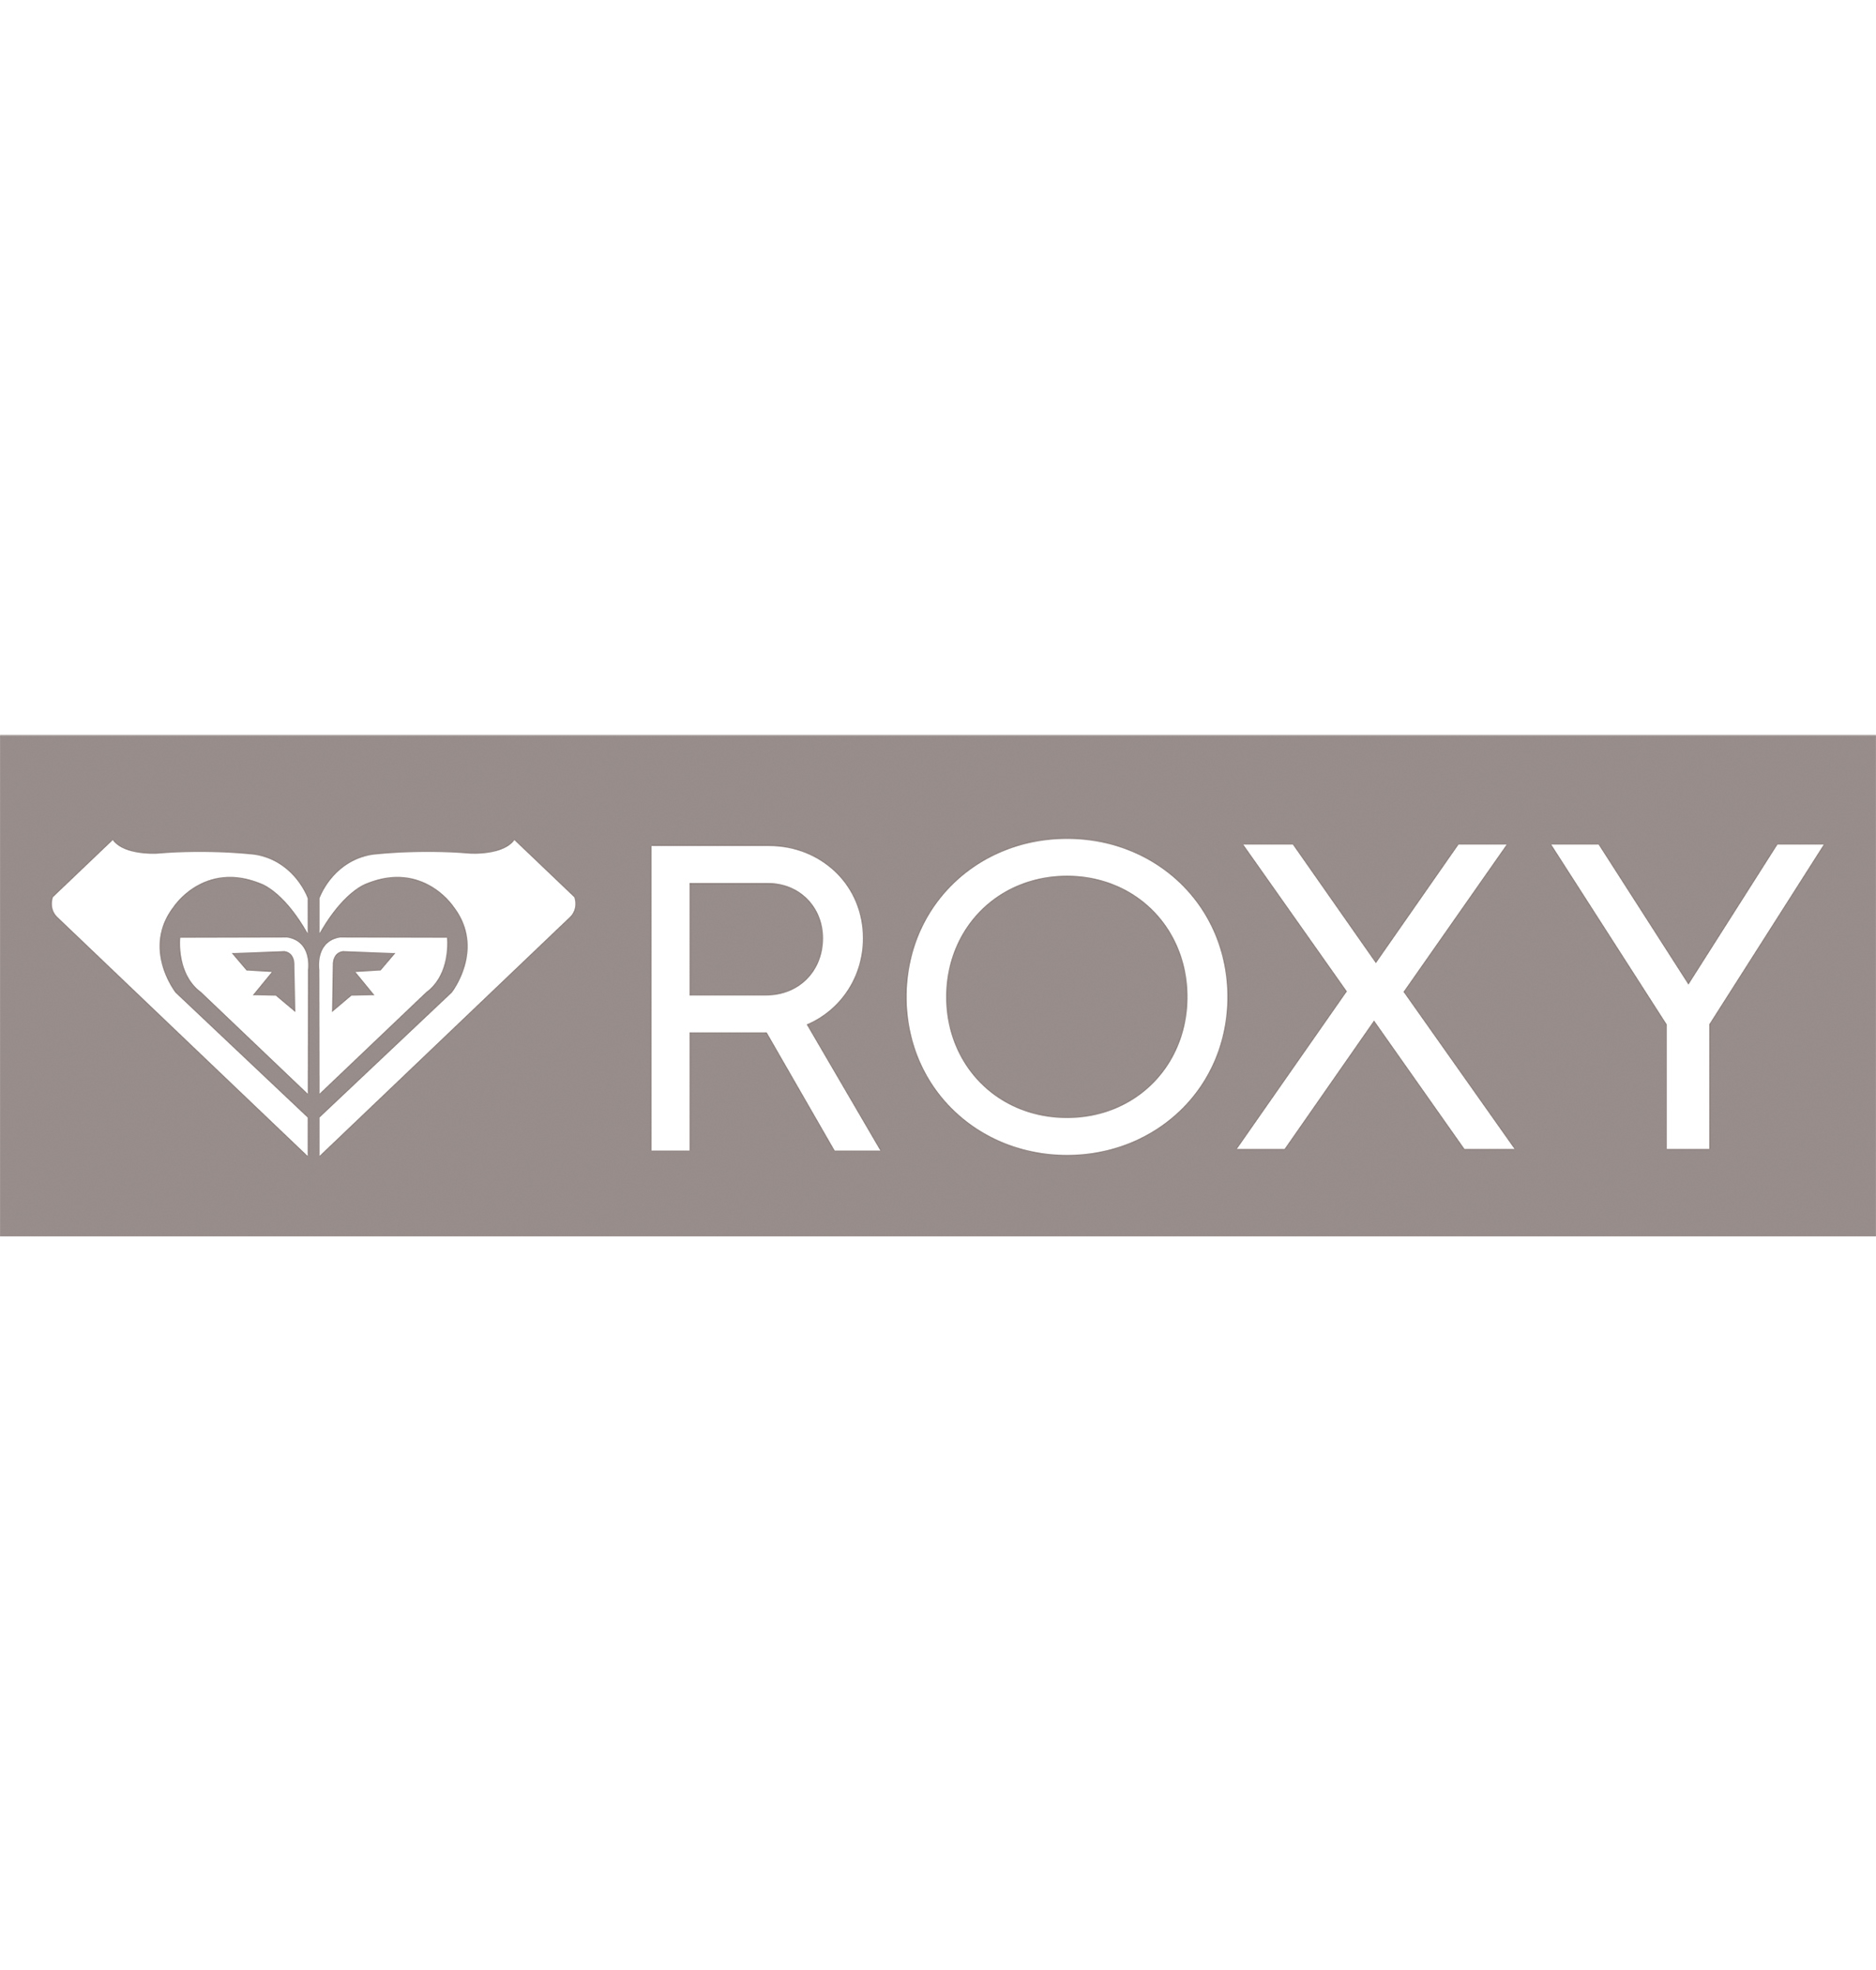 ROXY-B アクティブなROXYファンの目印になるブランドロゴステッカー